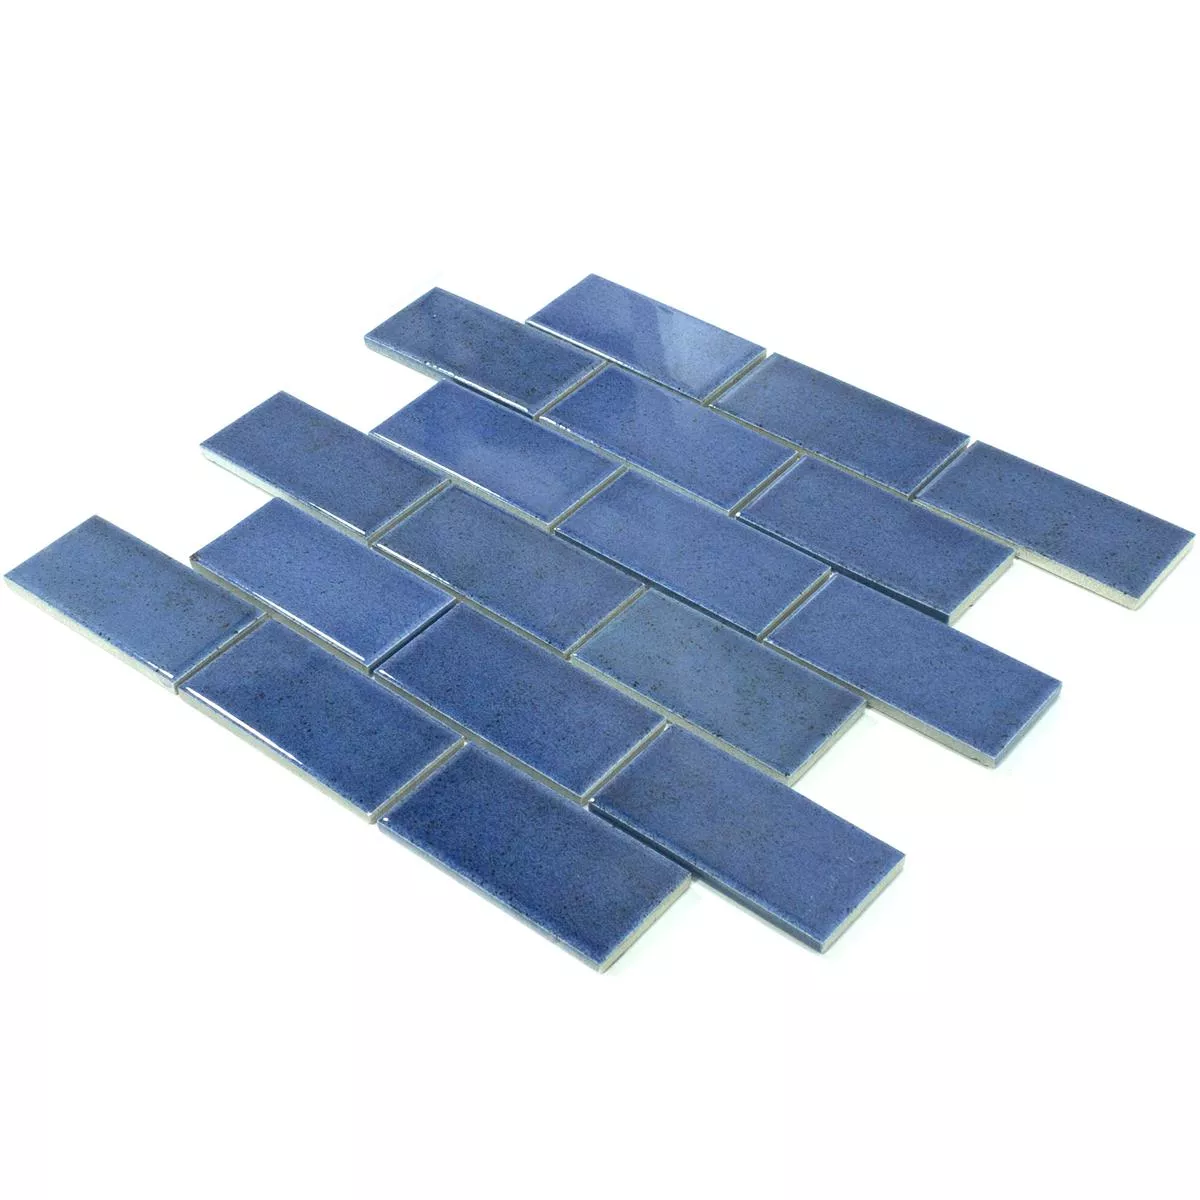 Ceramic Mosaic Tiles Eldertown Brick Dark Blue